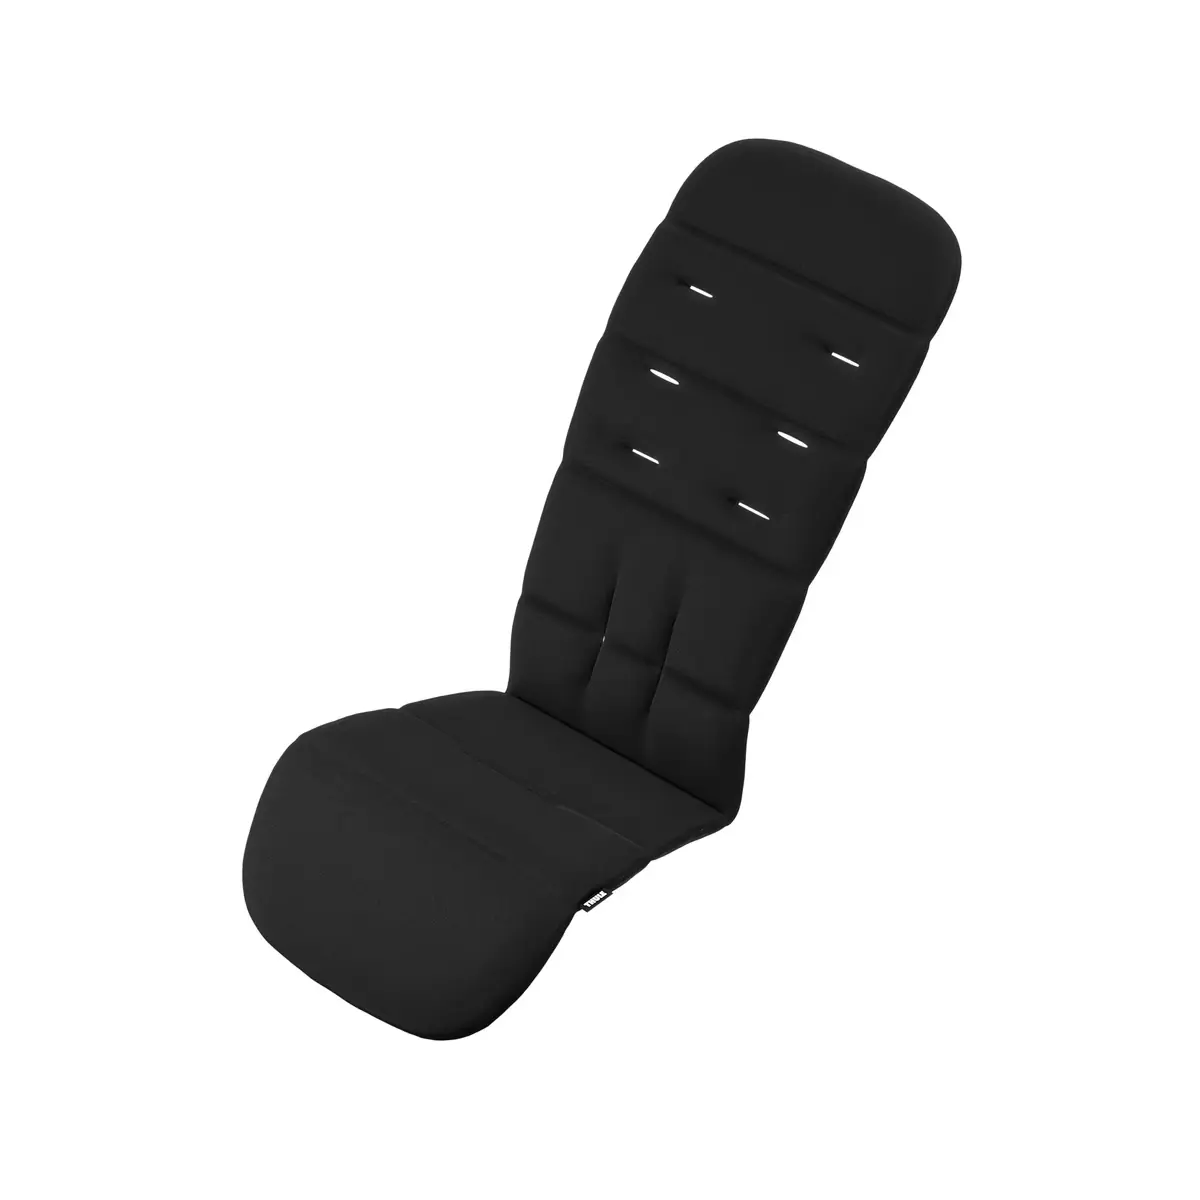 Thule Stroller Seat Liner-Black